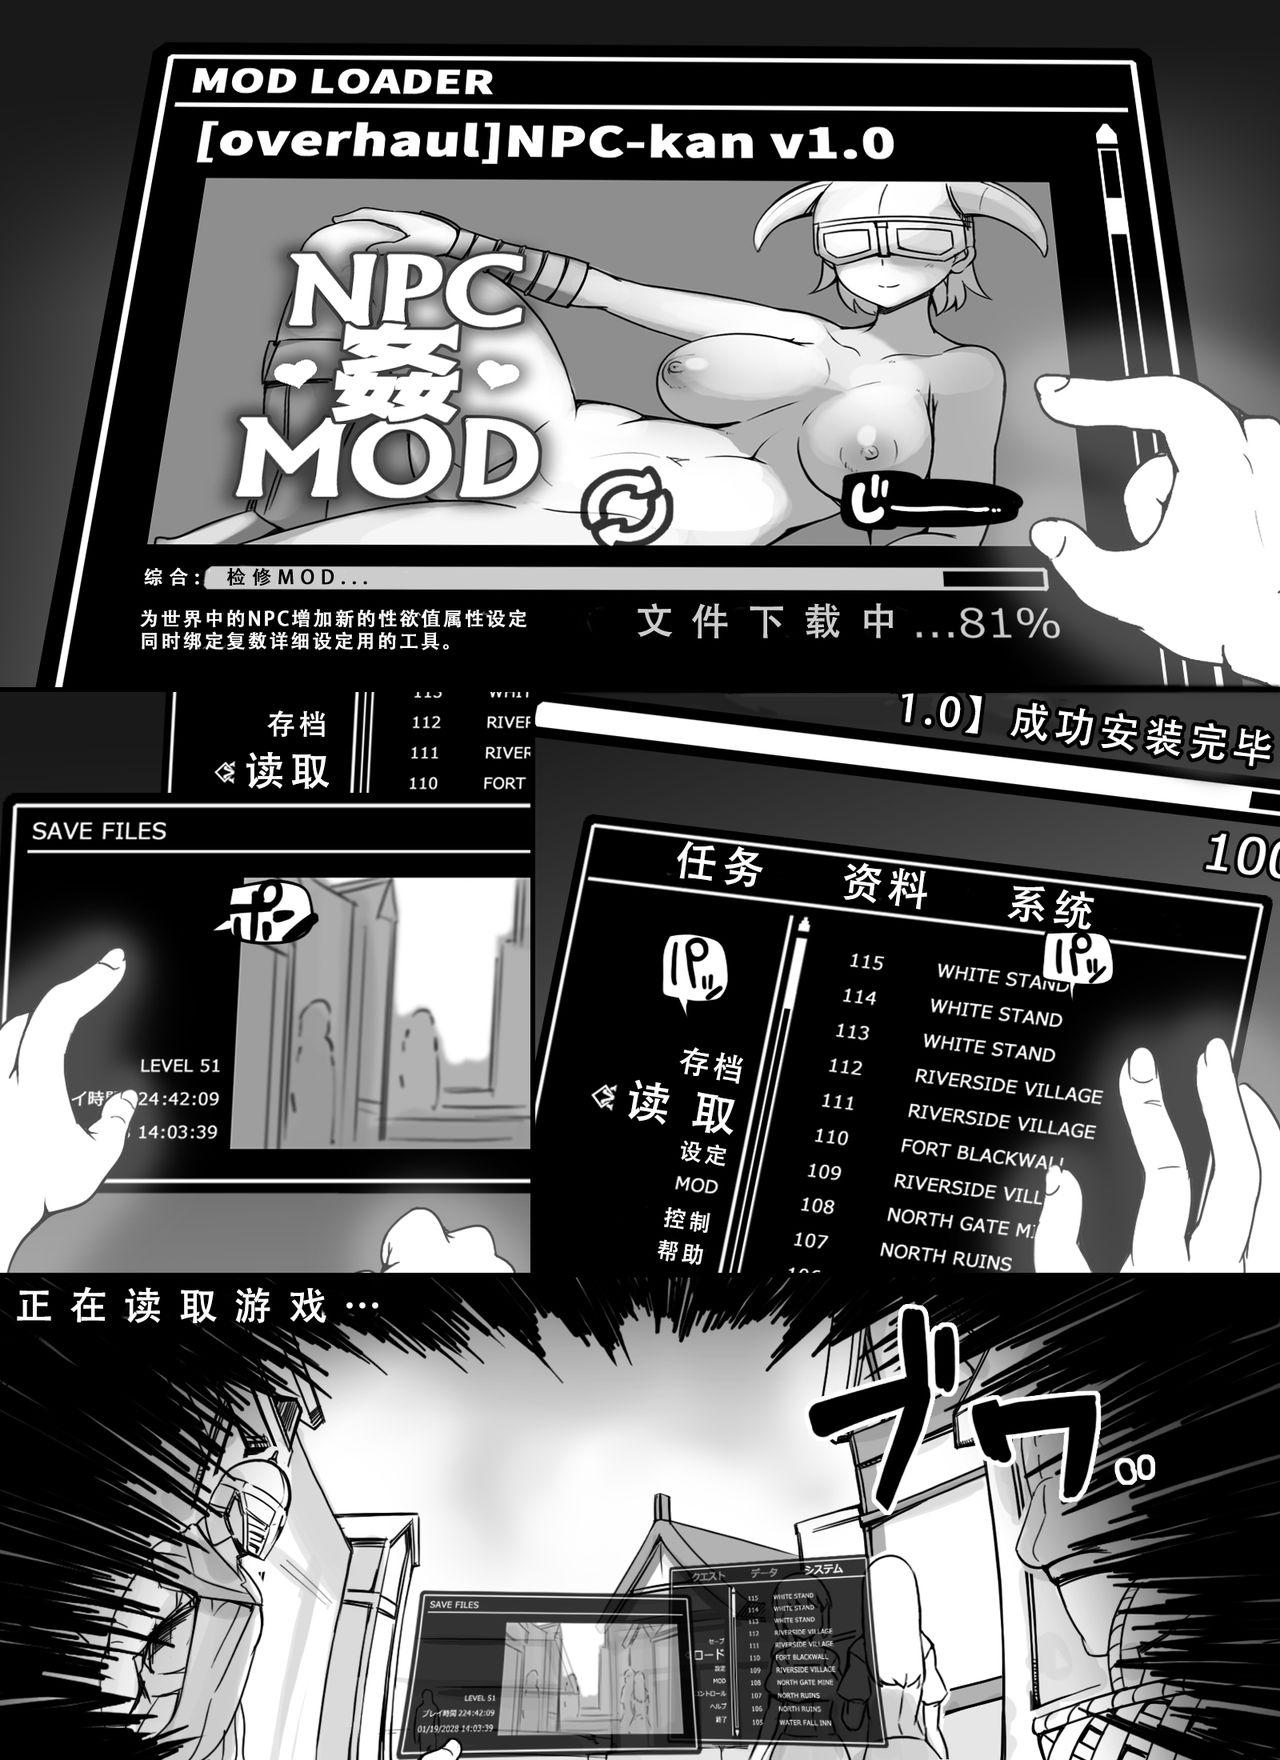 Curves NPC Kan MOD - The elder scrolls Nurugel - Page 4